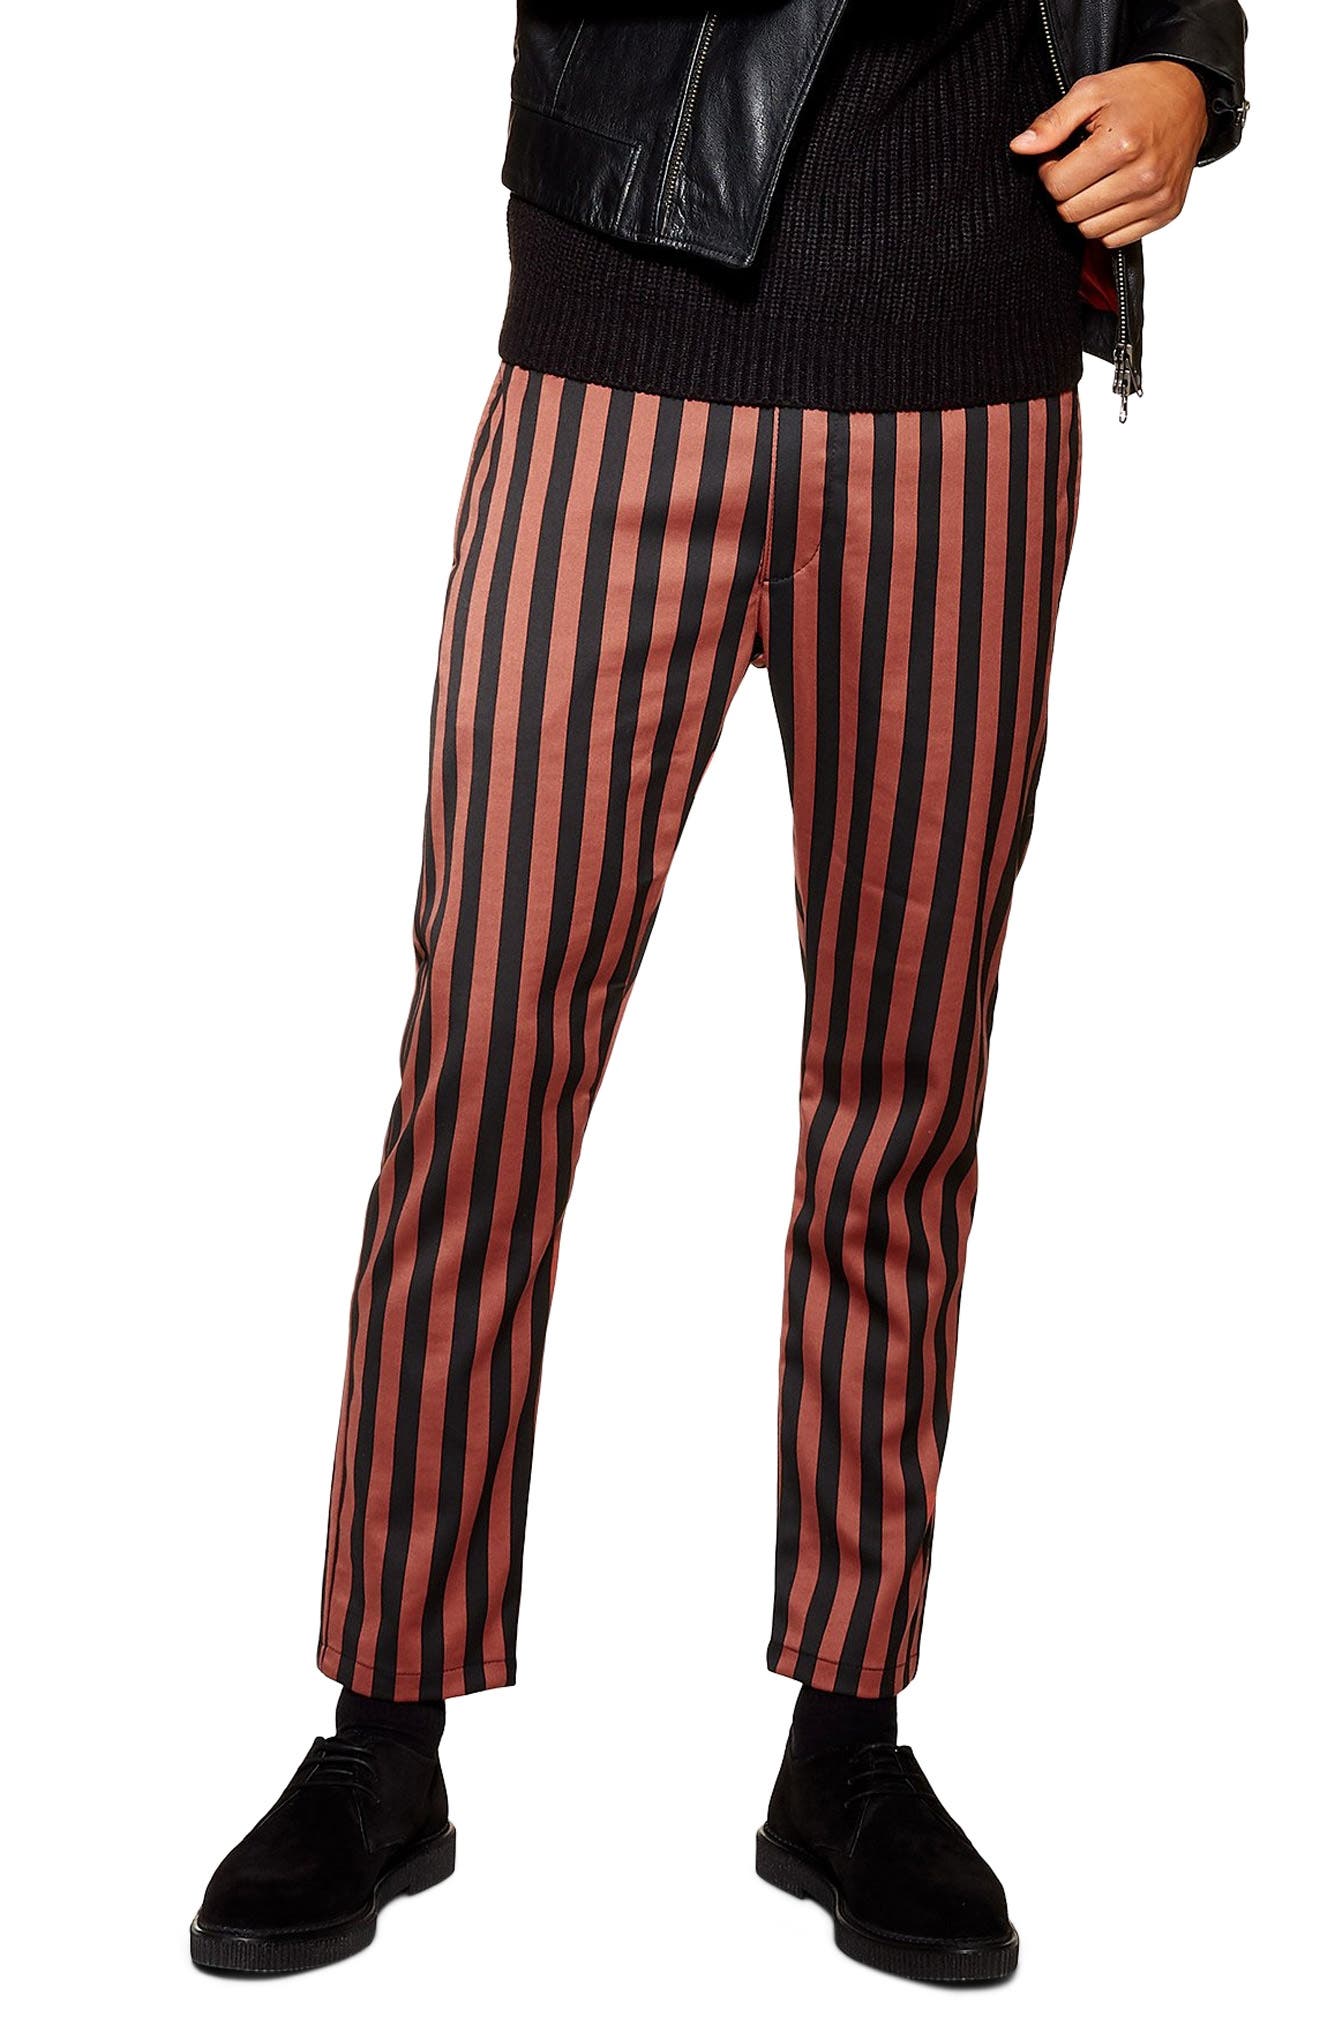 jogger striped pants